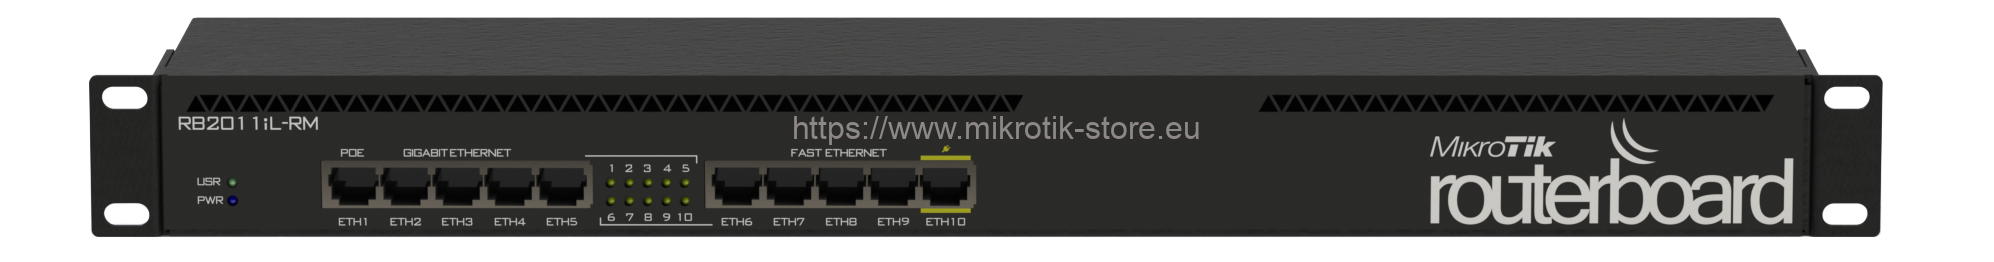 Mikrotik rb2011 - rackmount